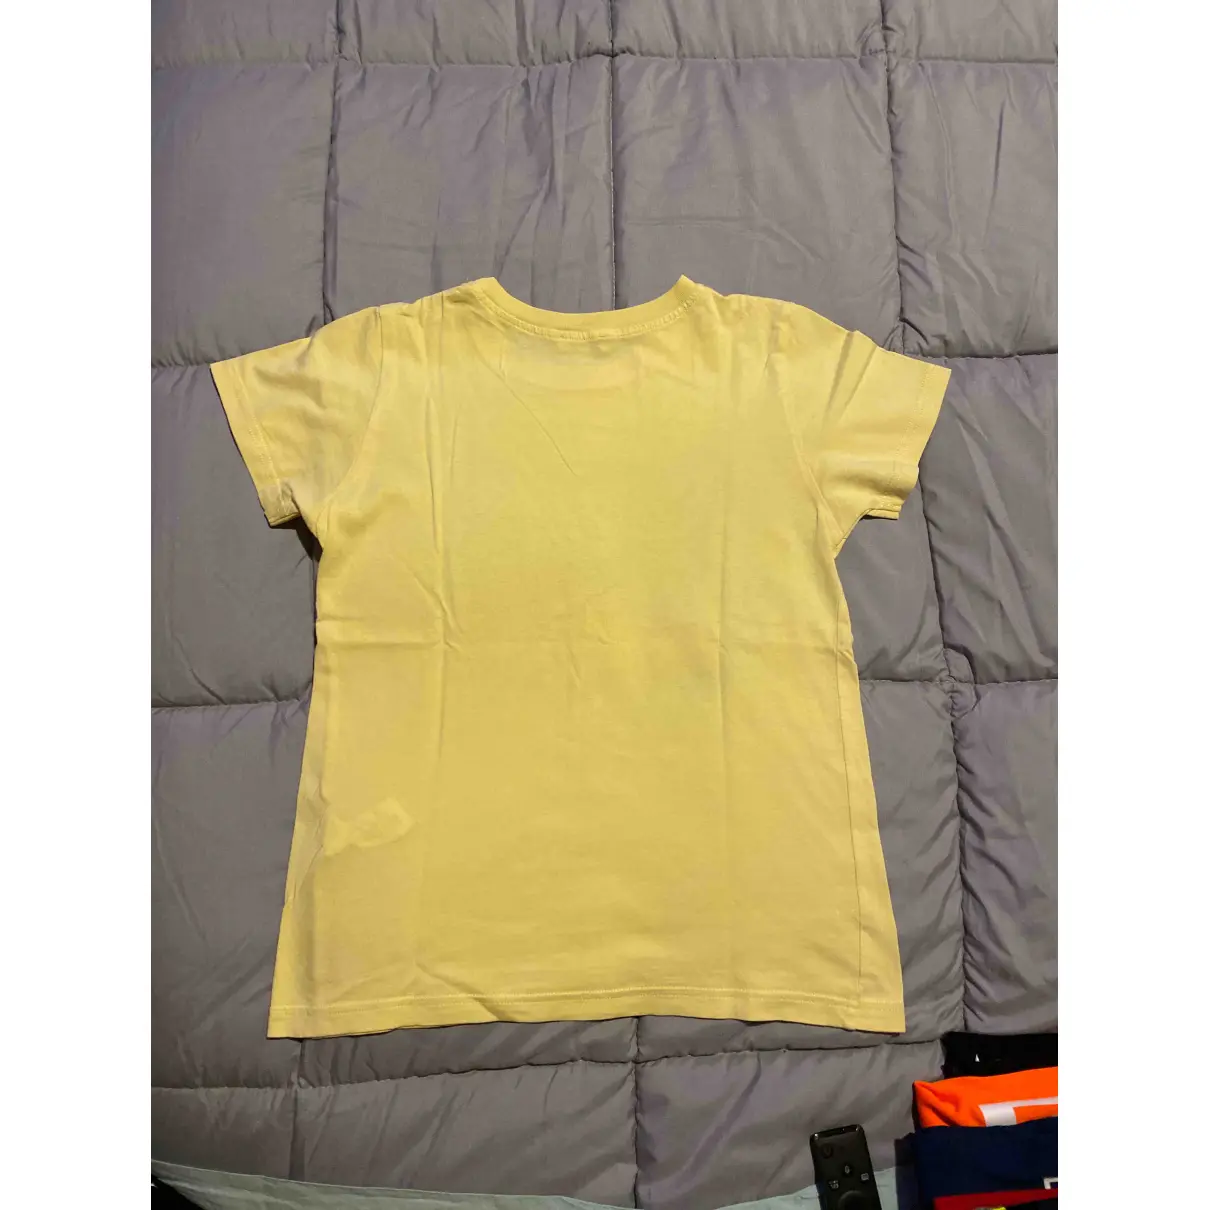 Buy Kenzo Yellow Cotton Top online